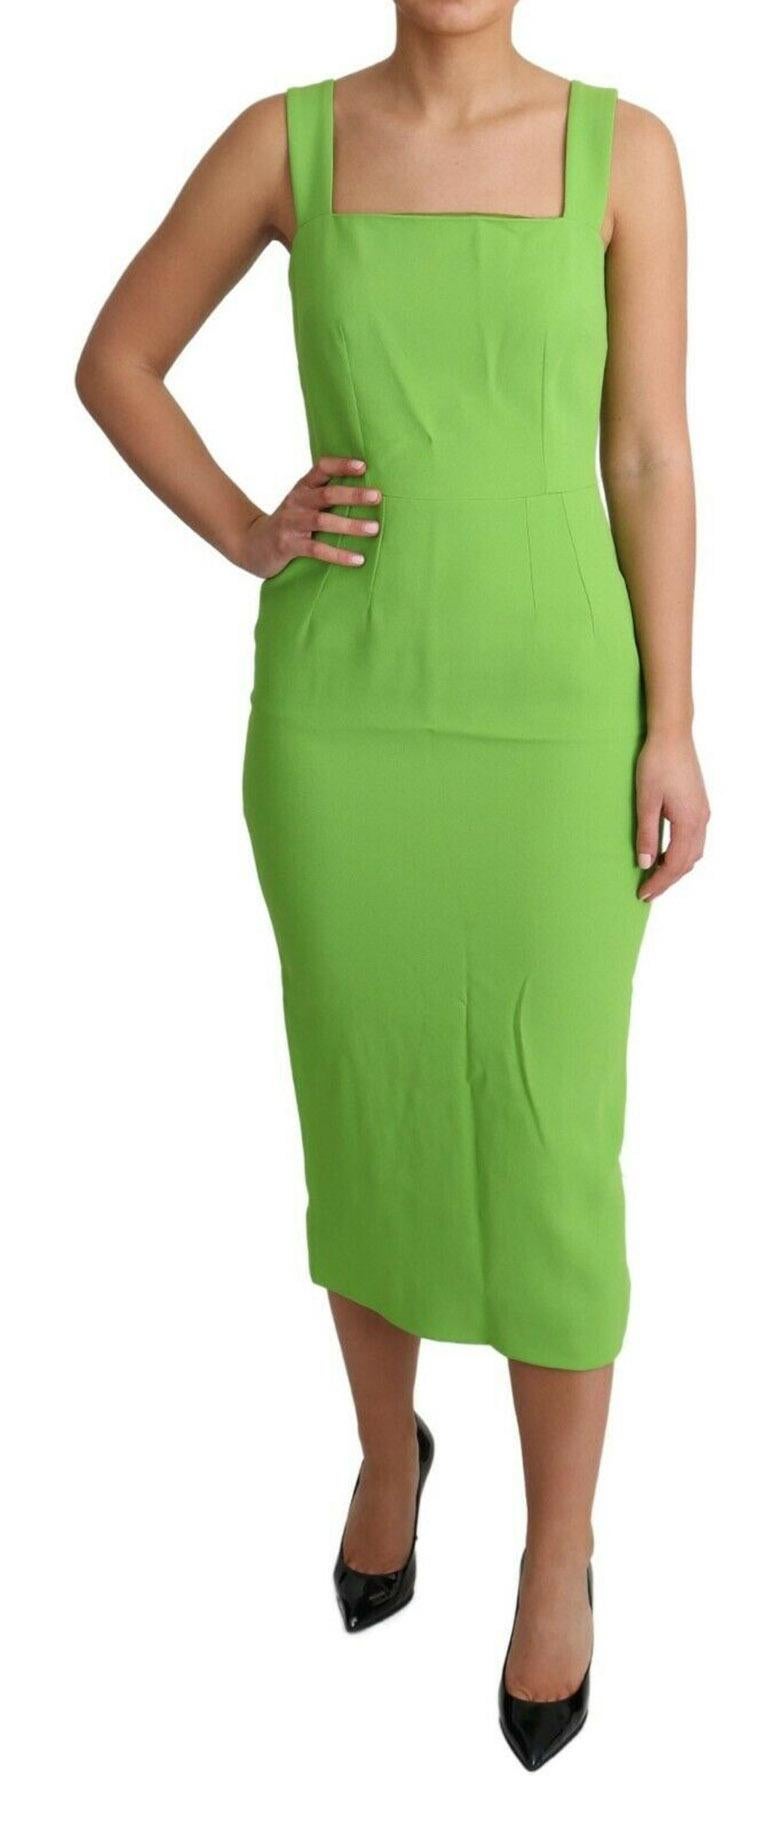 lime green church dress